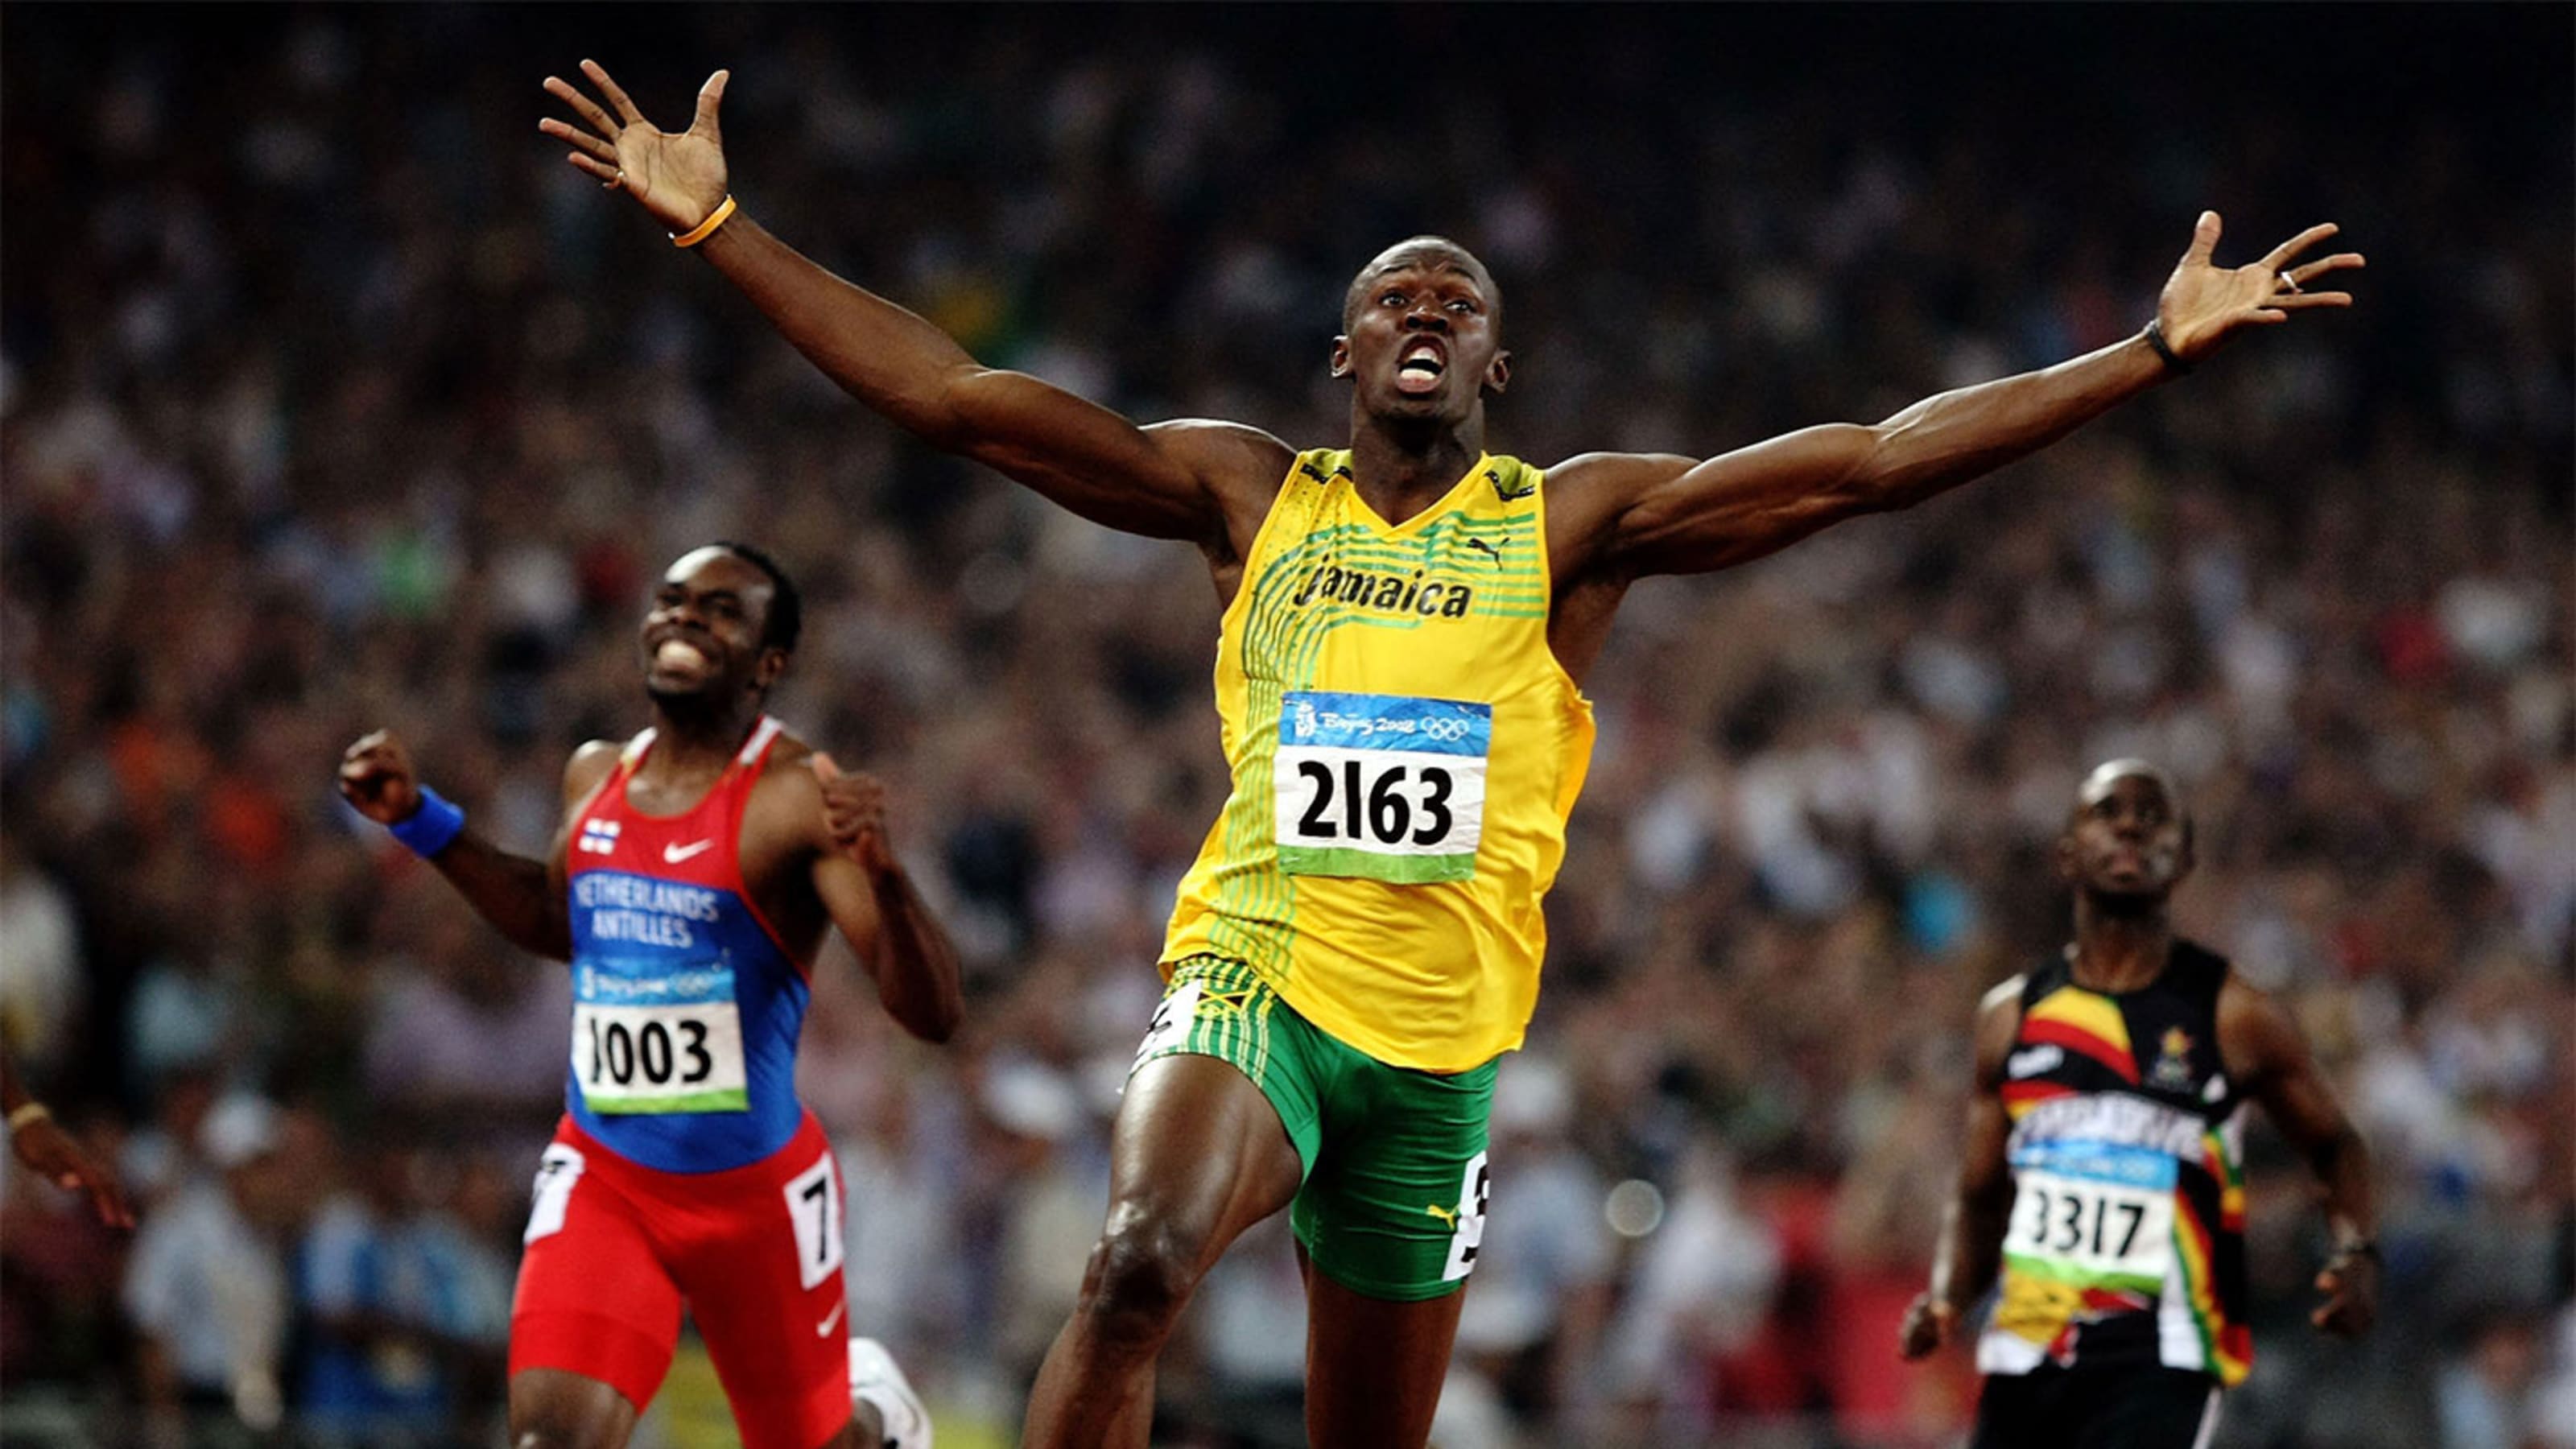 Usain Bolt EDGE Dream to Win 